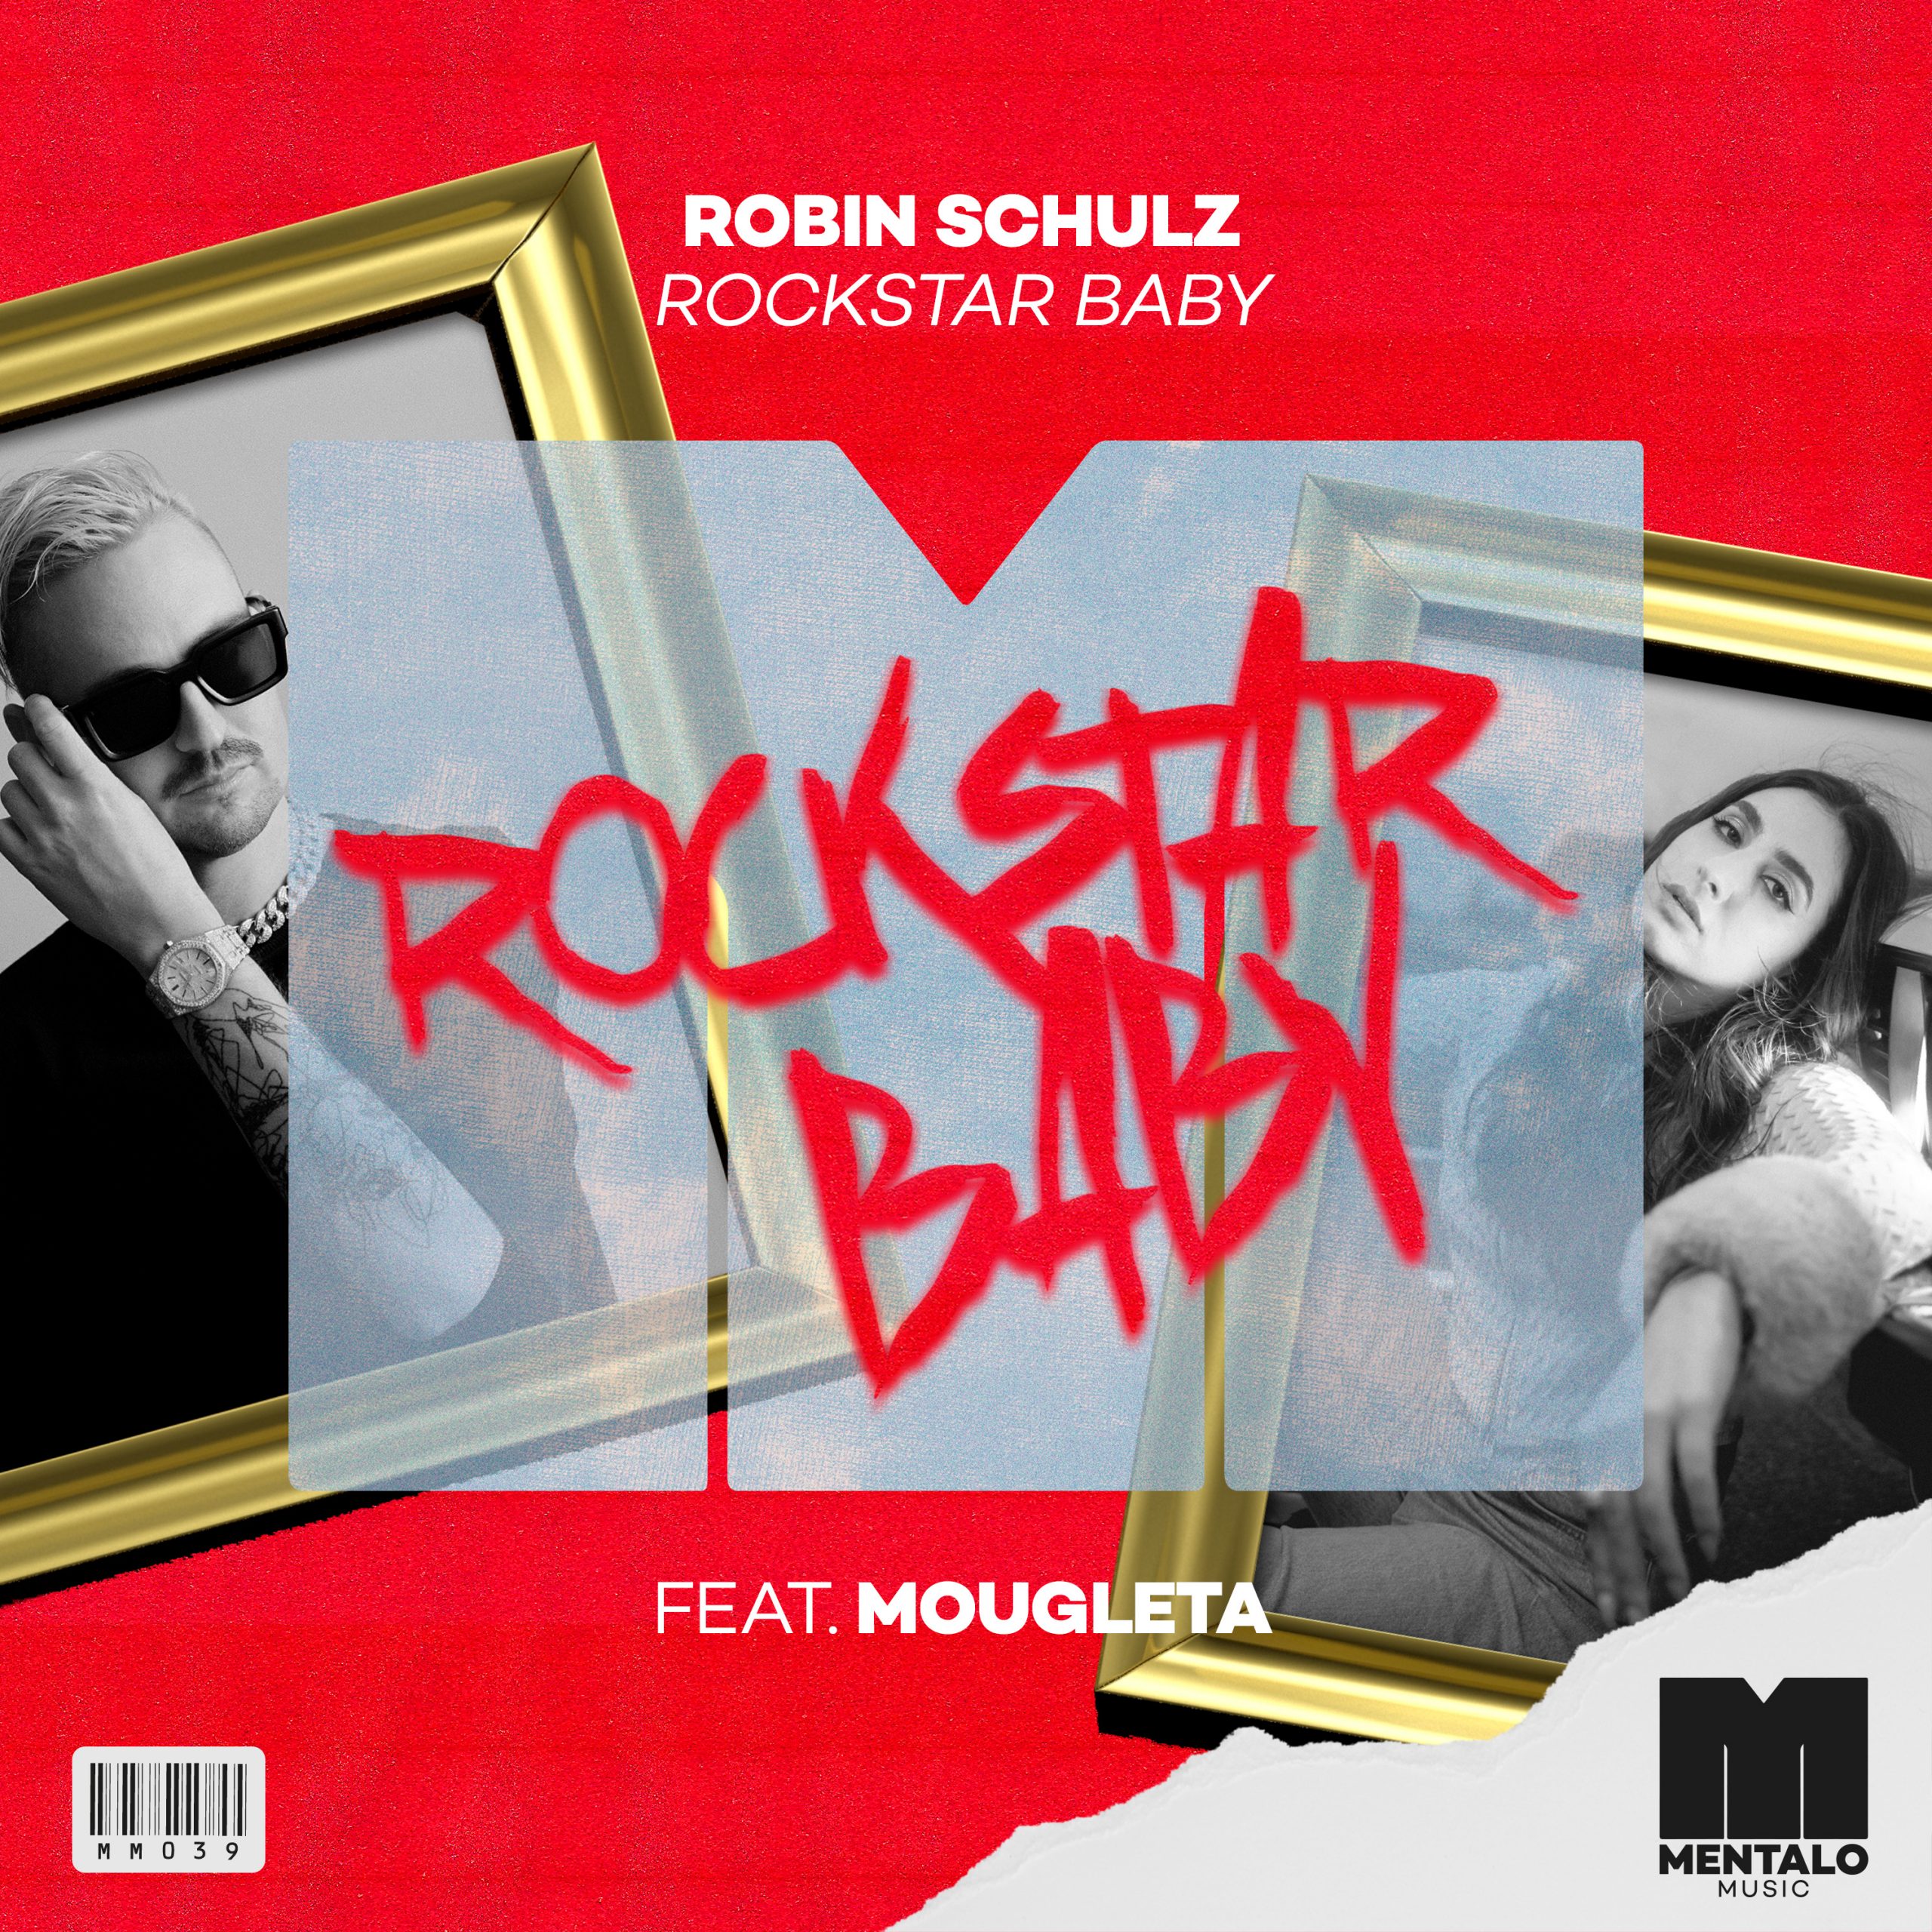 Robin Schulz teams up with rising talent Mougleta on ‘Rockstar Baby’